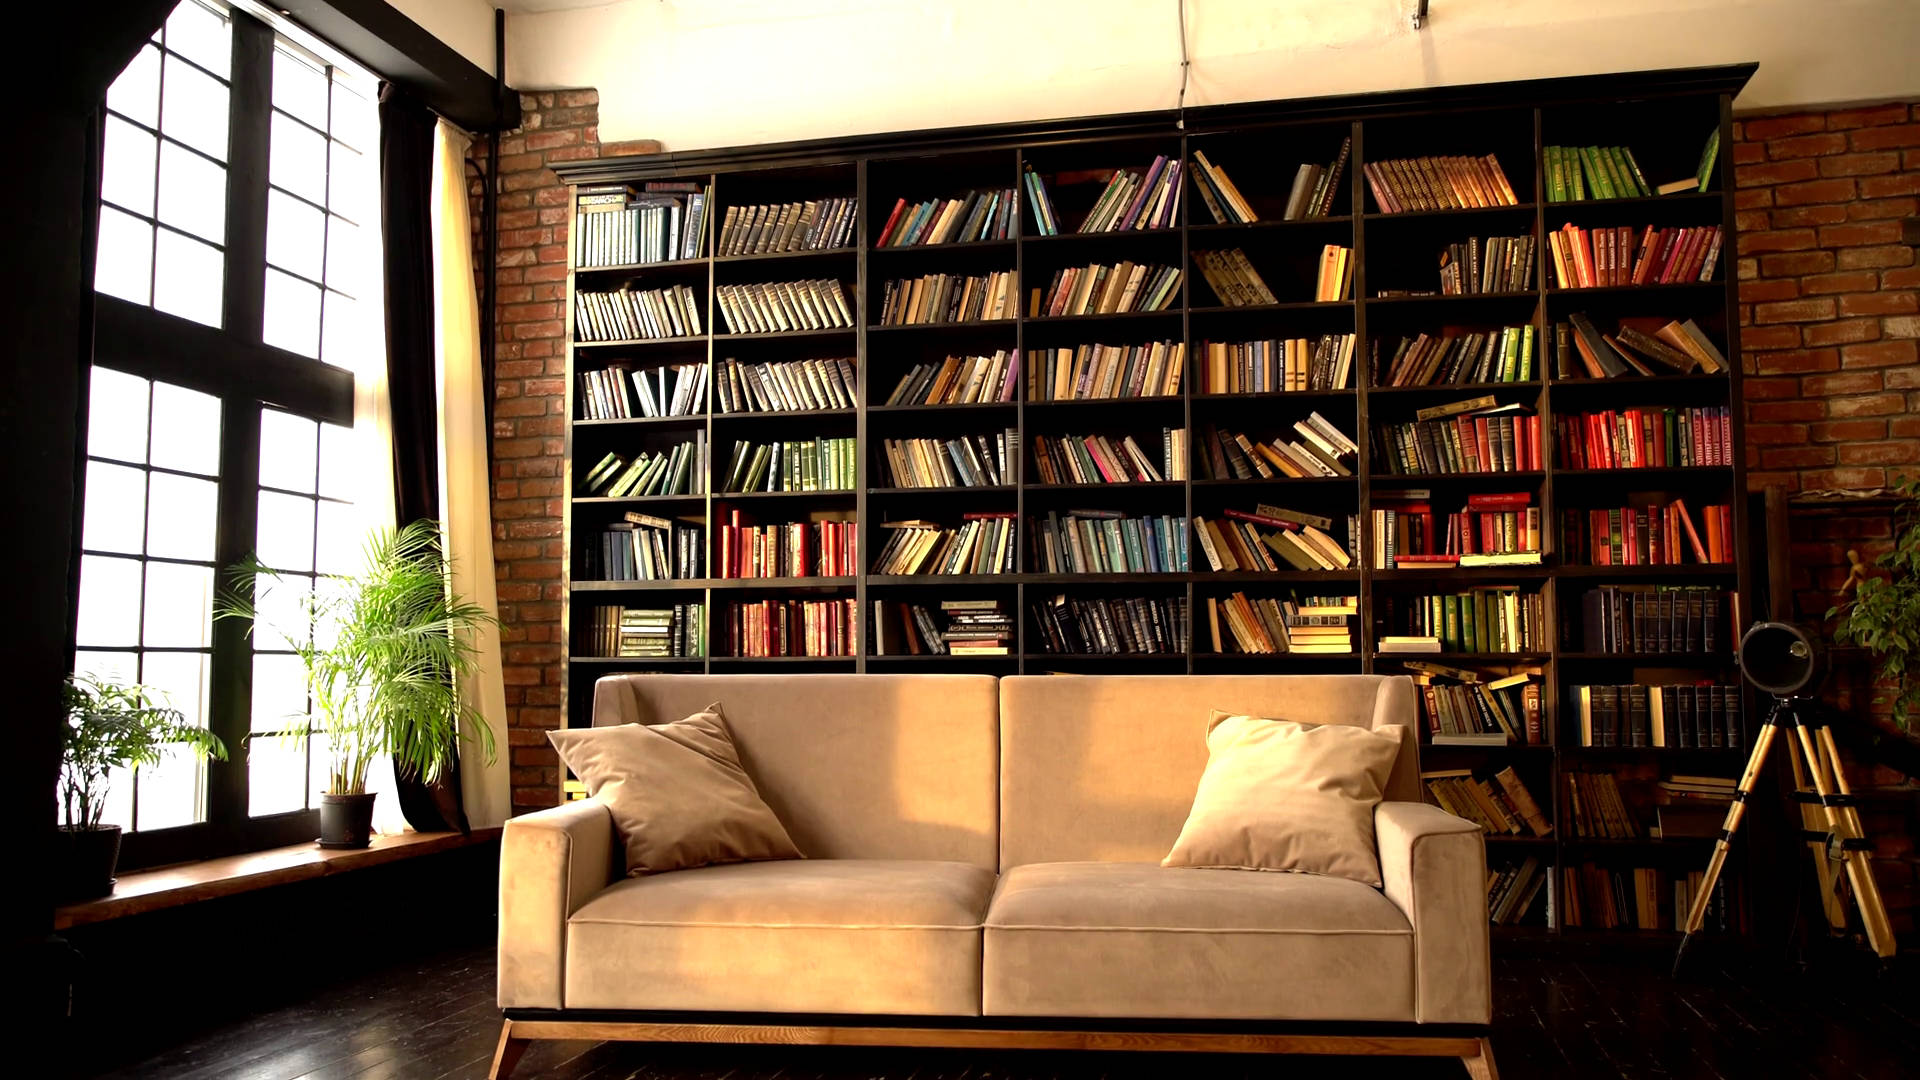 Living Room With Big Bookshelf Background